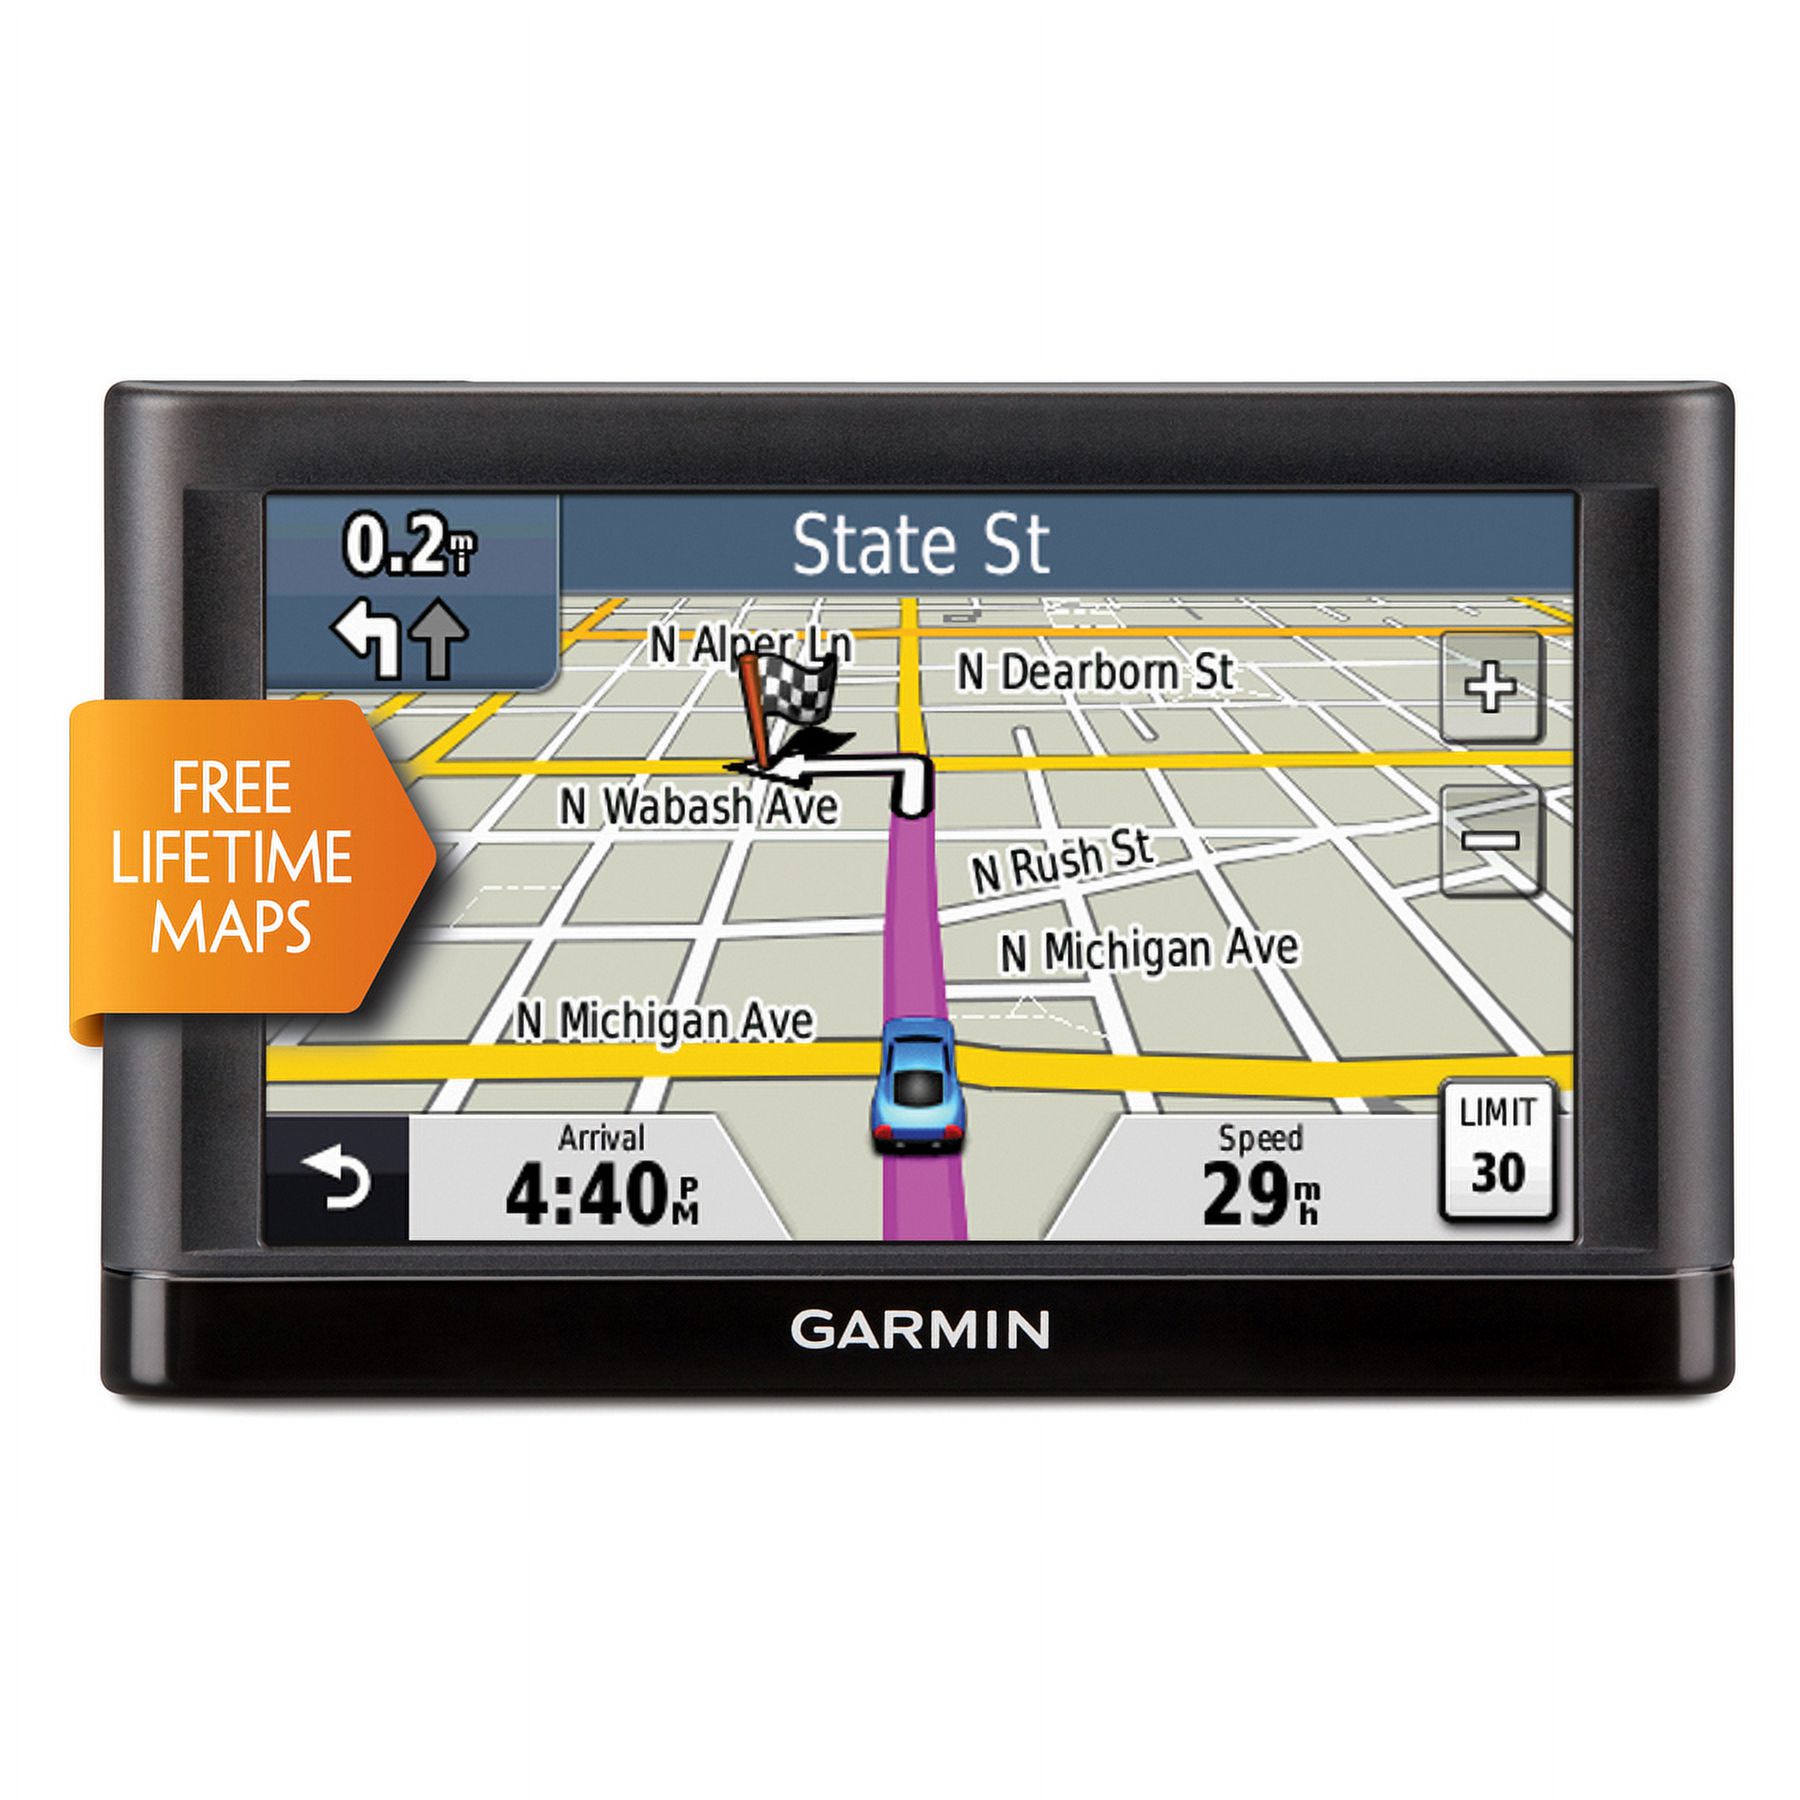 Garmin n��vi 52LM Automobile Portable GPS Navigator - image 2 of 3